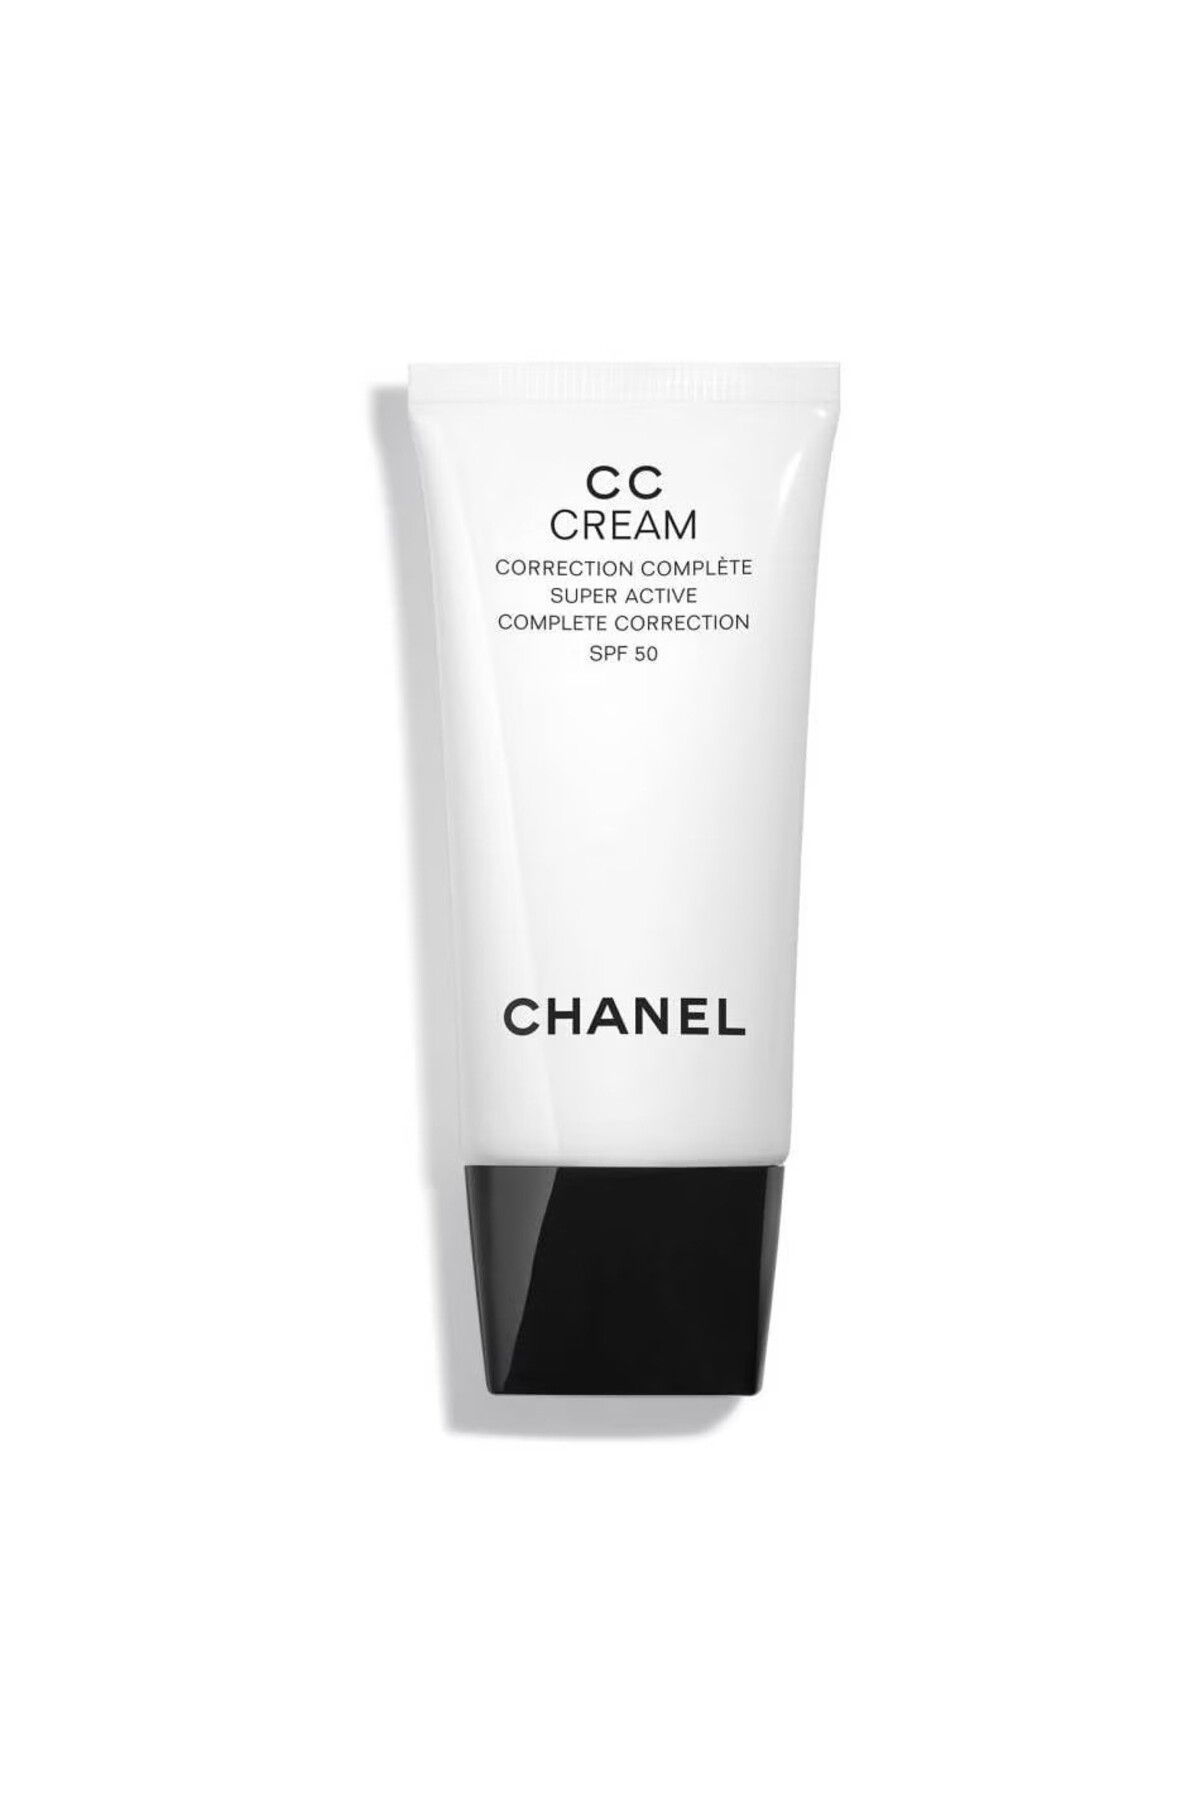 Chanel CC CREAM - SPF 50 Eşit Cilt Tonu Ve Aydınlık Görünüm Veren Süper Aktif Komple Düzeltme CC Krem 30 ml